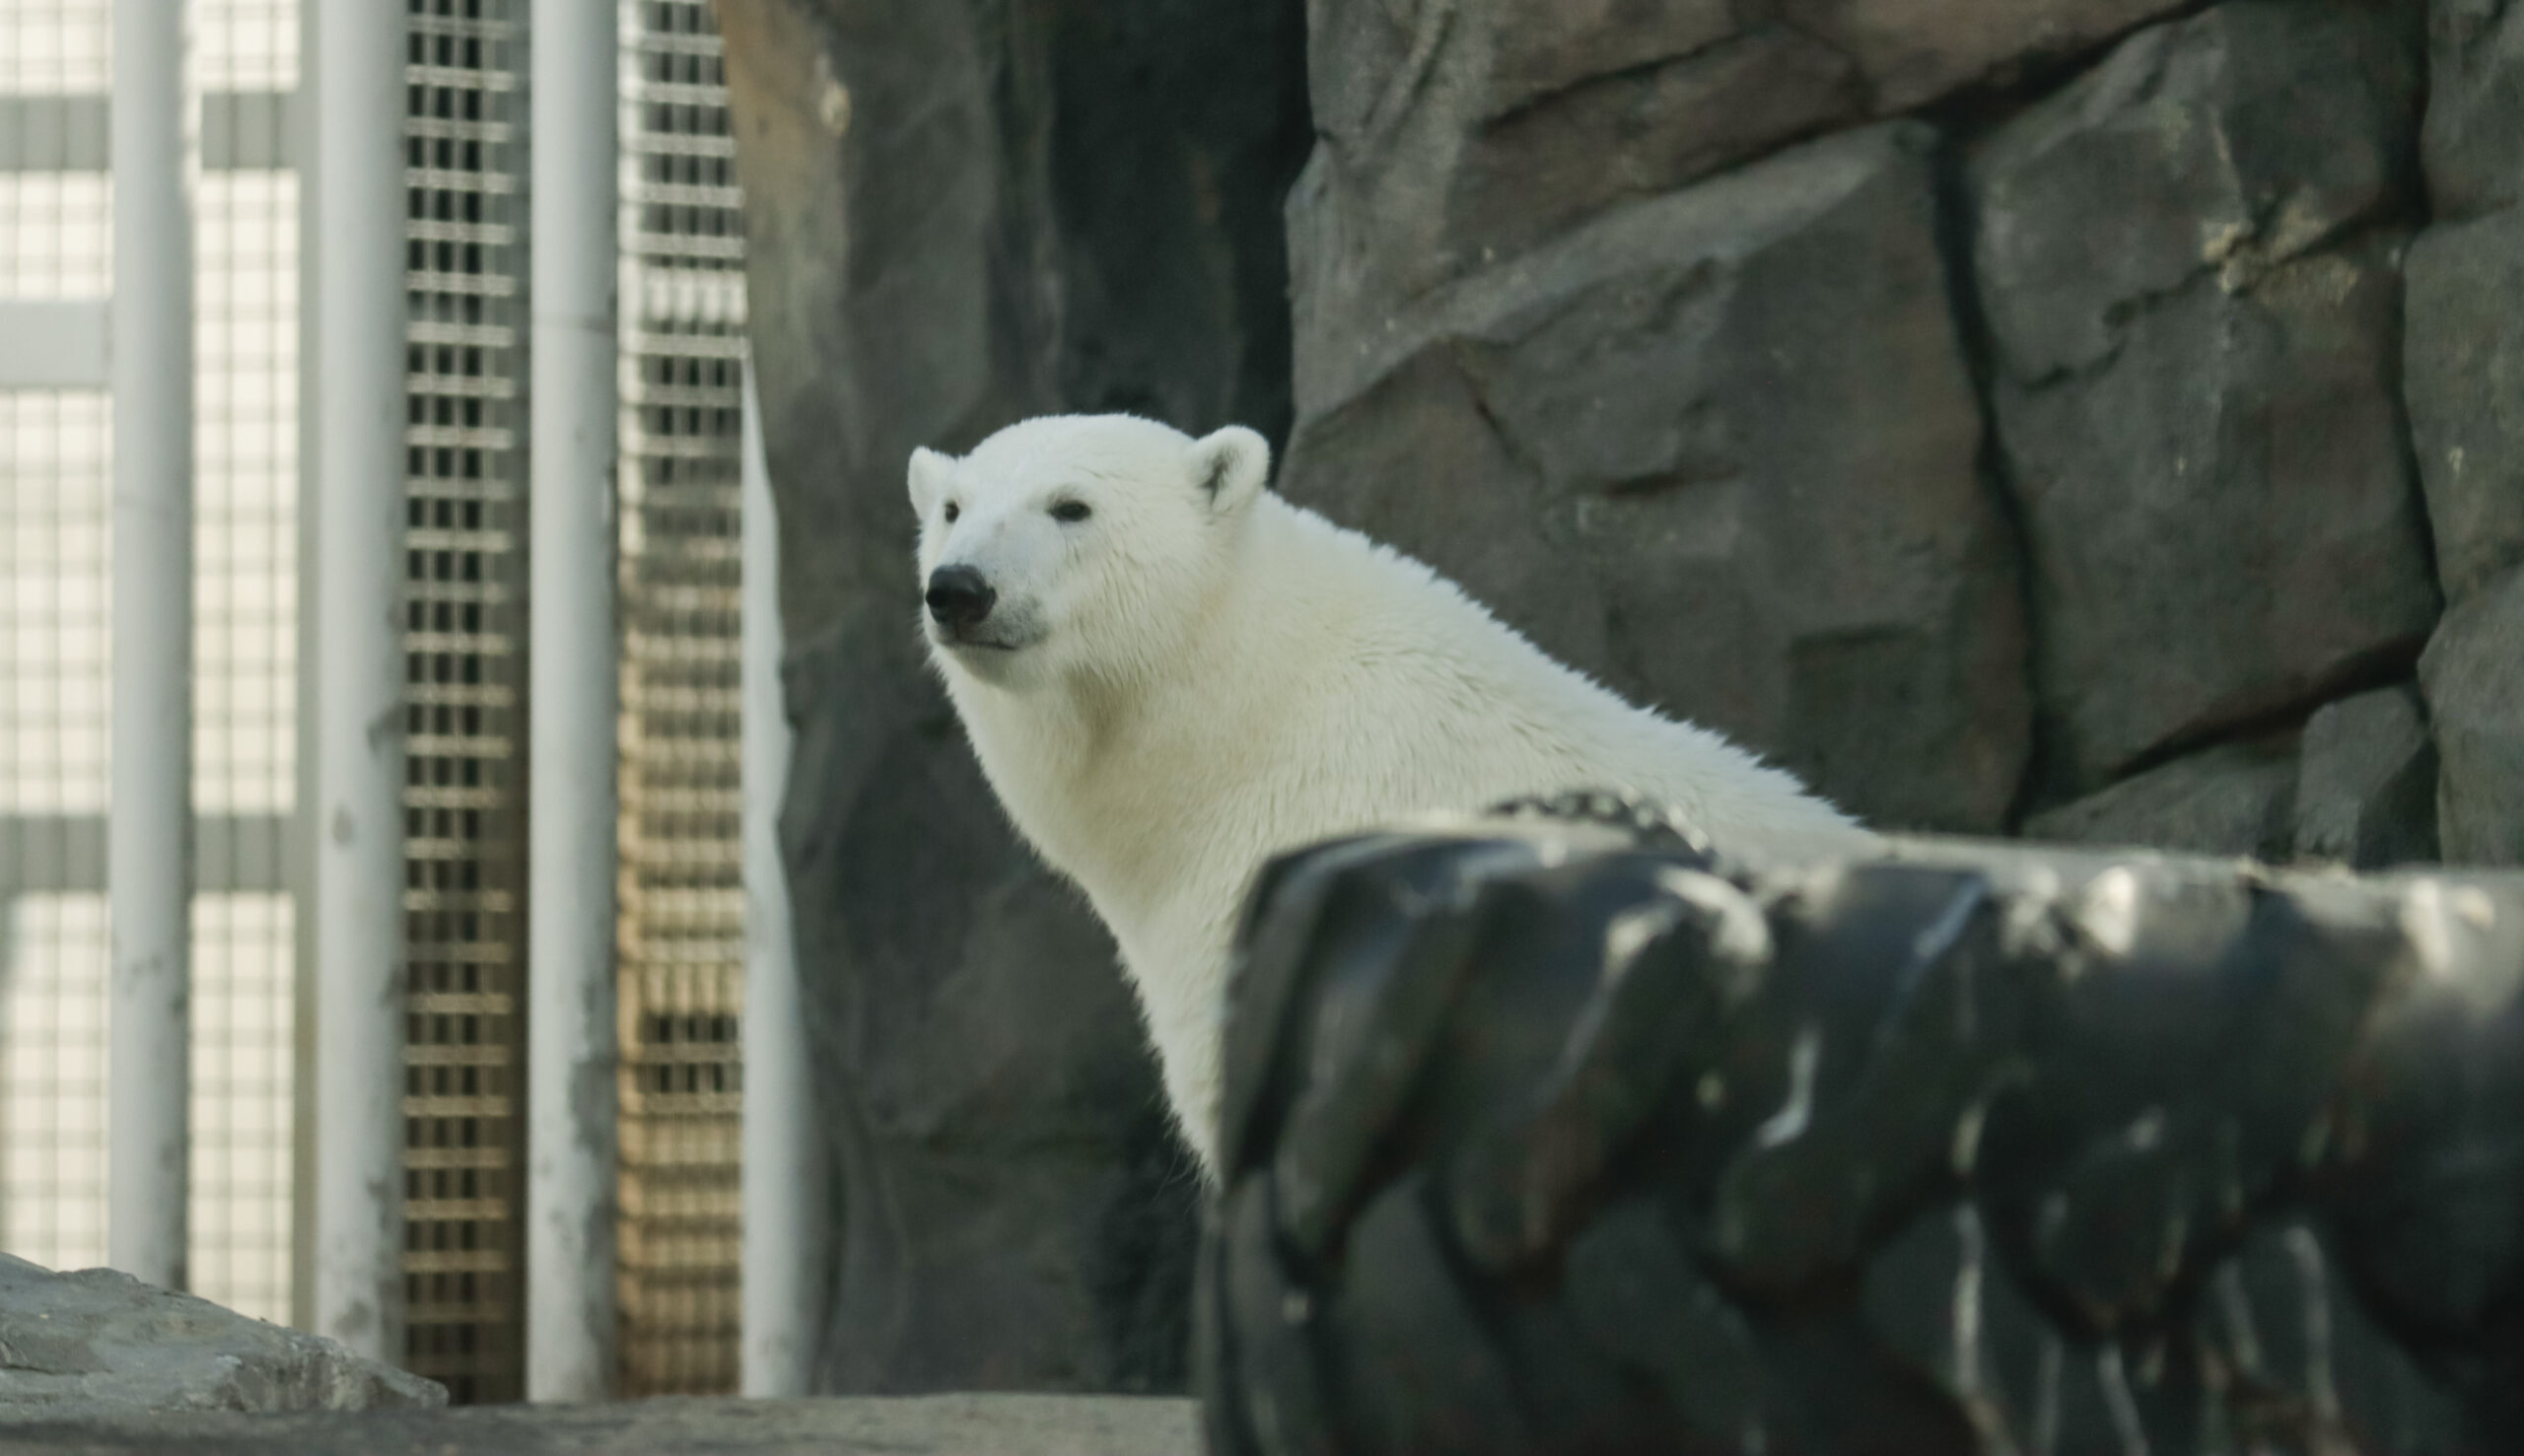 A polar bear sitting behind a tire.